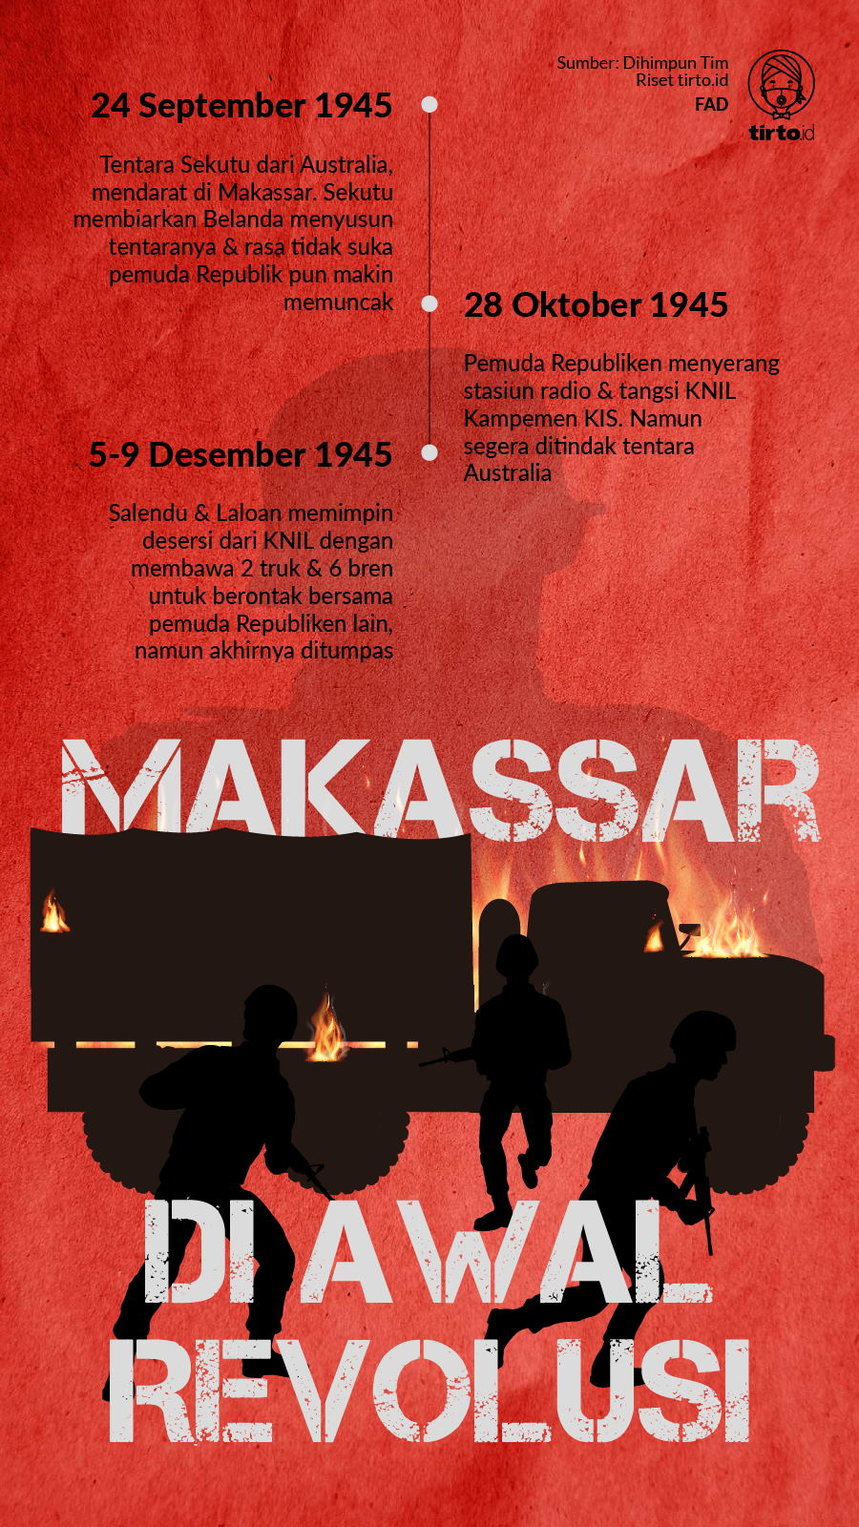 Infografik Makassar Di Awal Revolusi